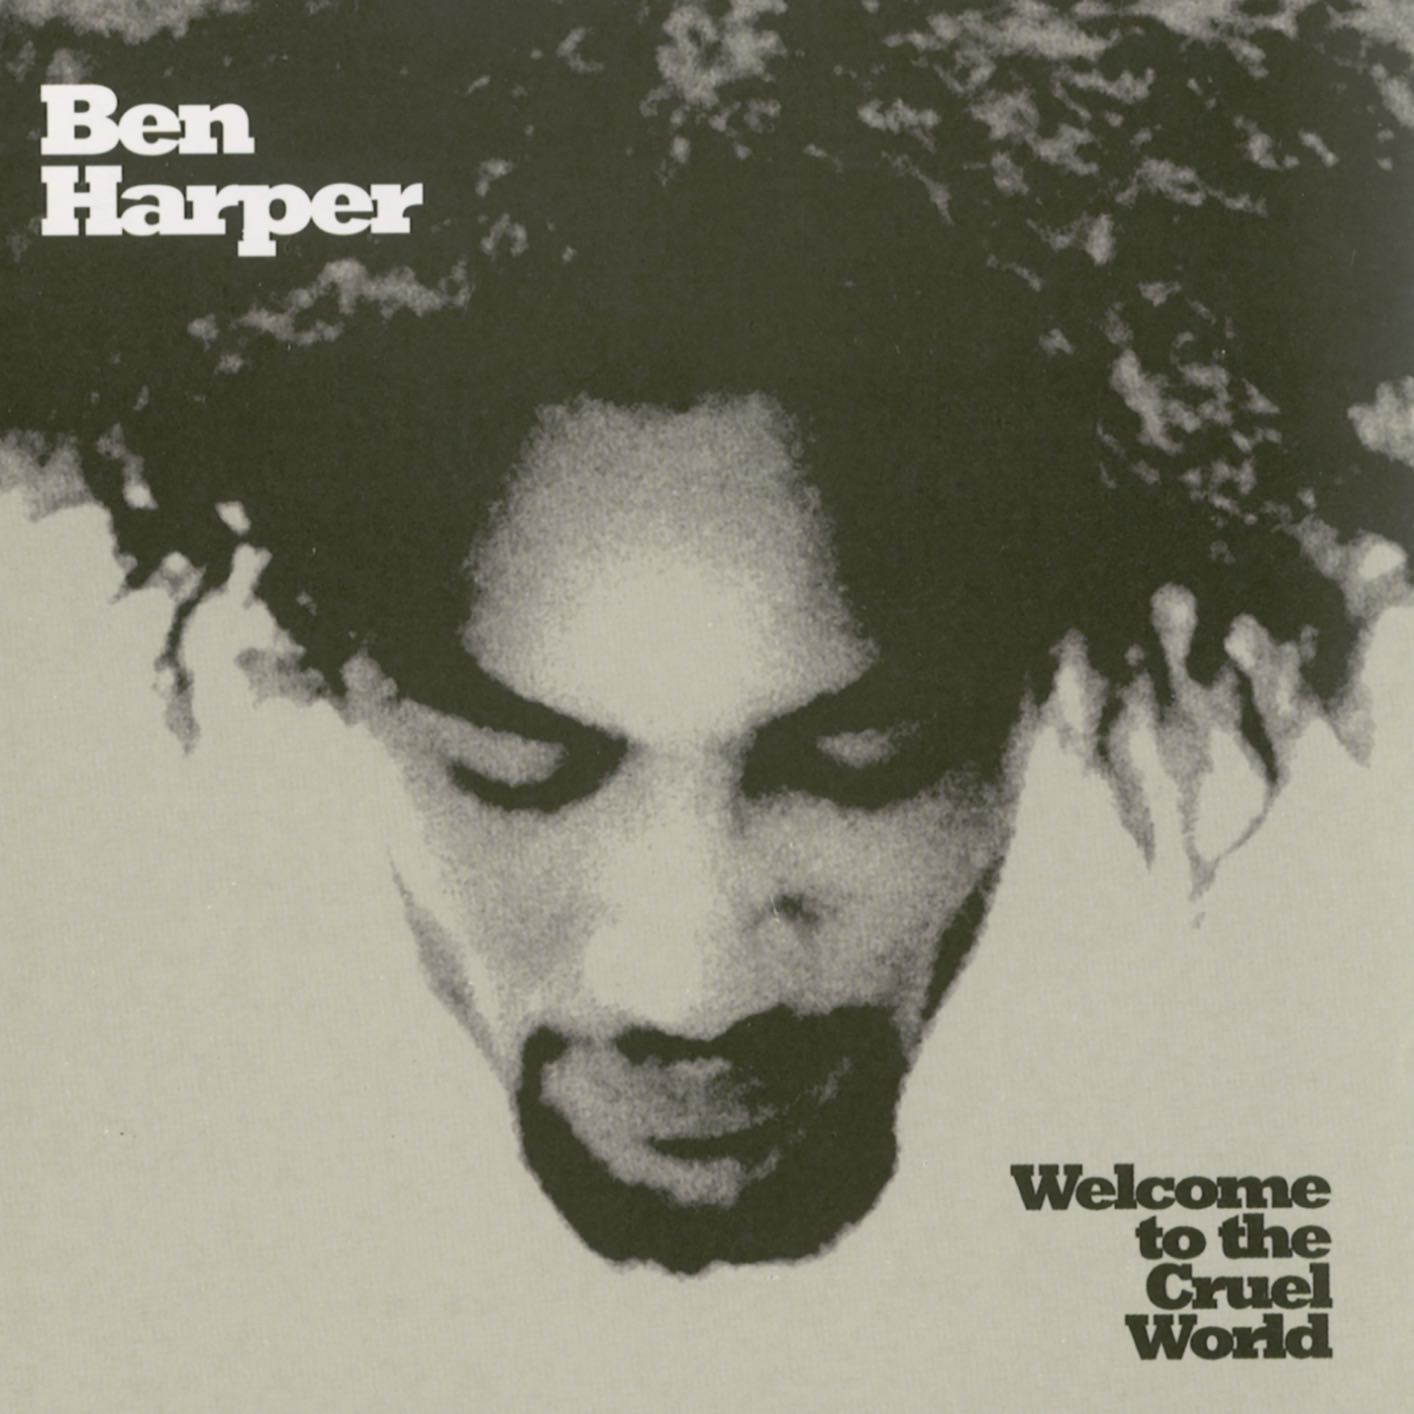 Ben Harper - Welcome To The Cruel World (1994/2016) [HDTracks FLAC 24bit/192kHz]